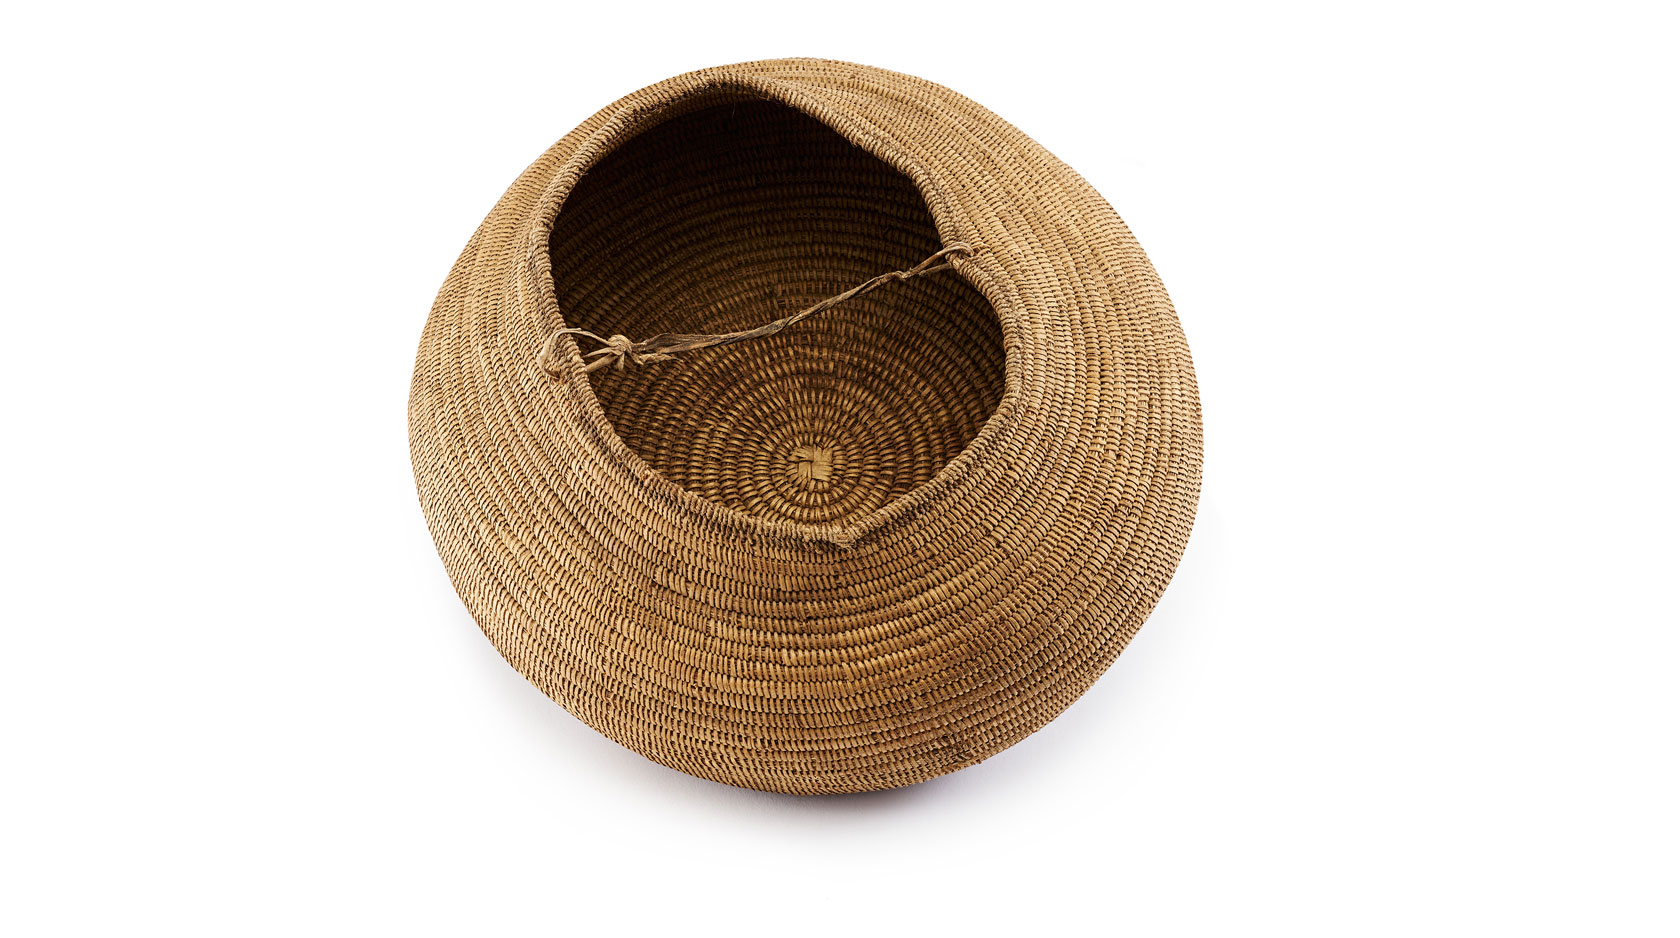 Basket, Angola, 19th century, Leutwein Coll., inventory number I/1352, photo: Axel Killian